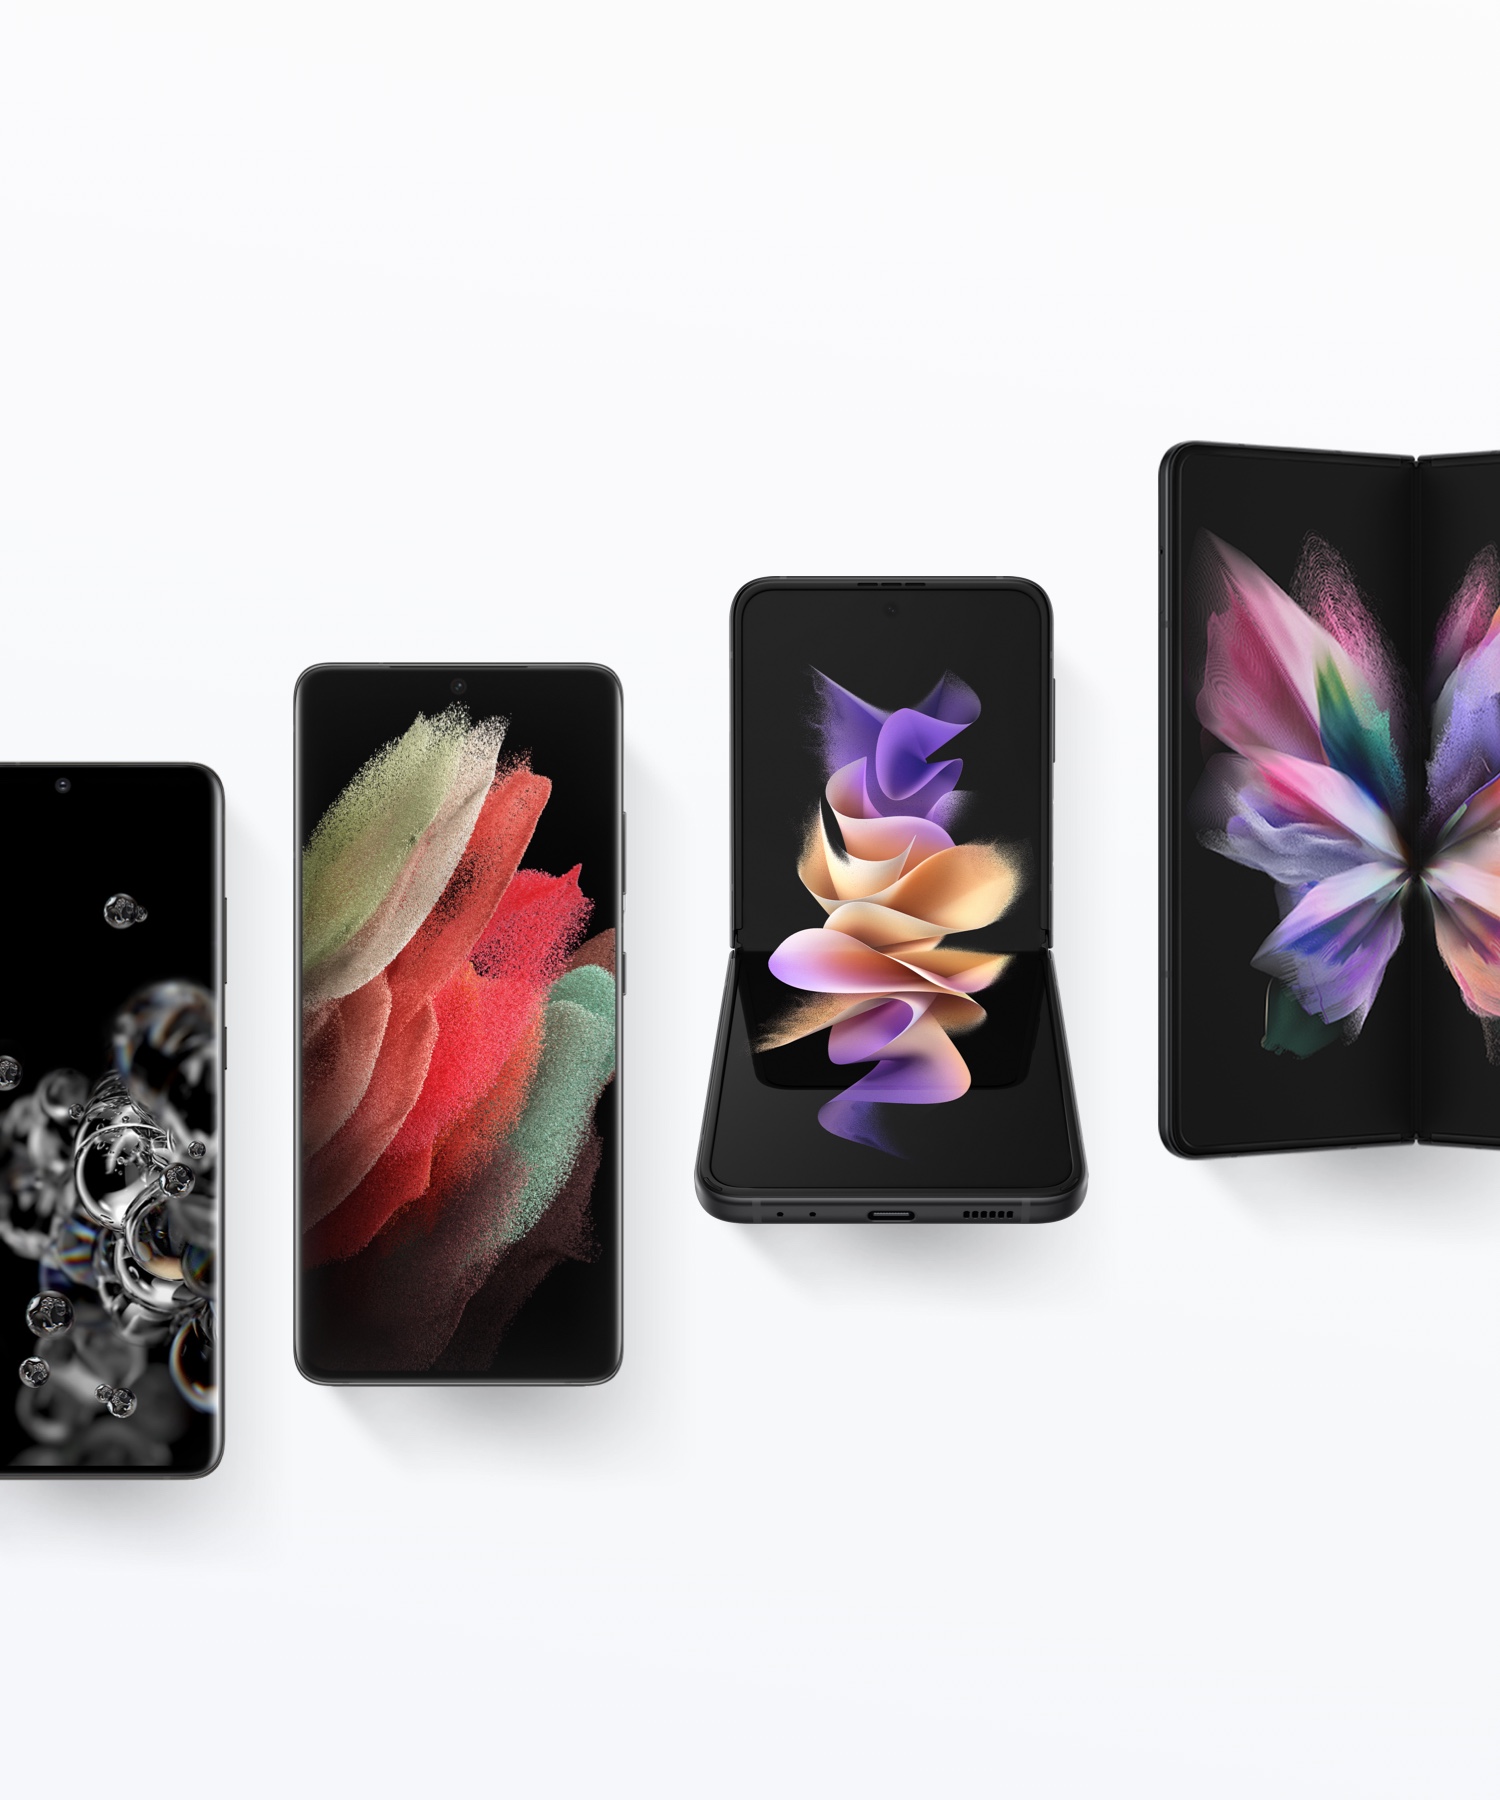  Samsung Galaxy S21 5G, US Version, 128GB, Purple - Unlocked  (Renewed) : Cell Phones & Accessories